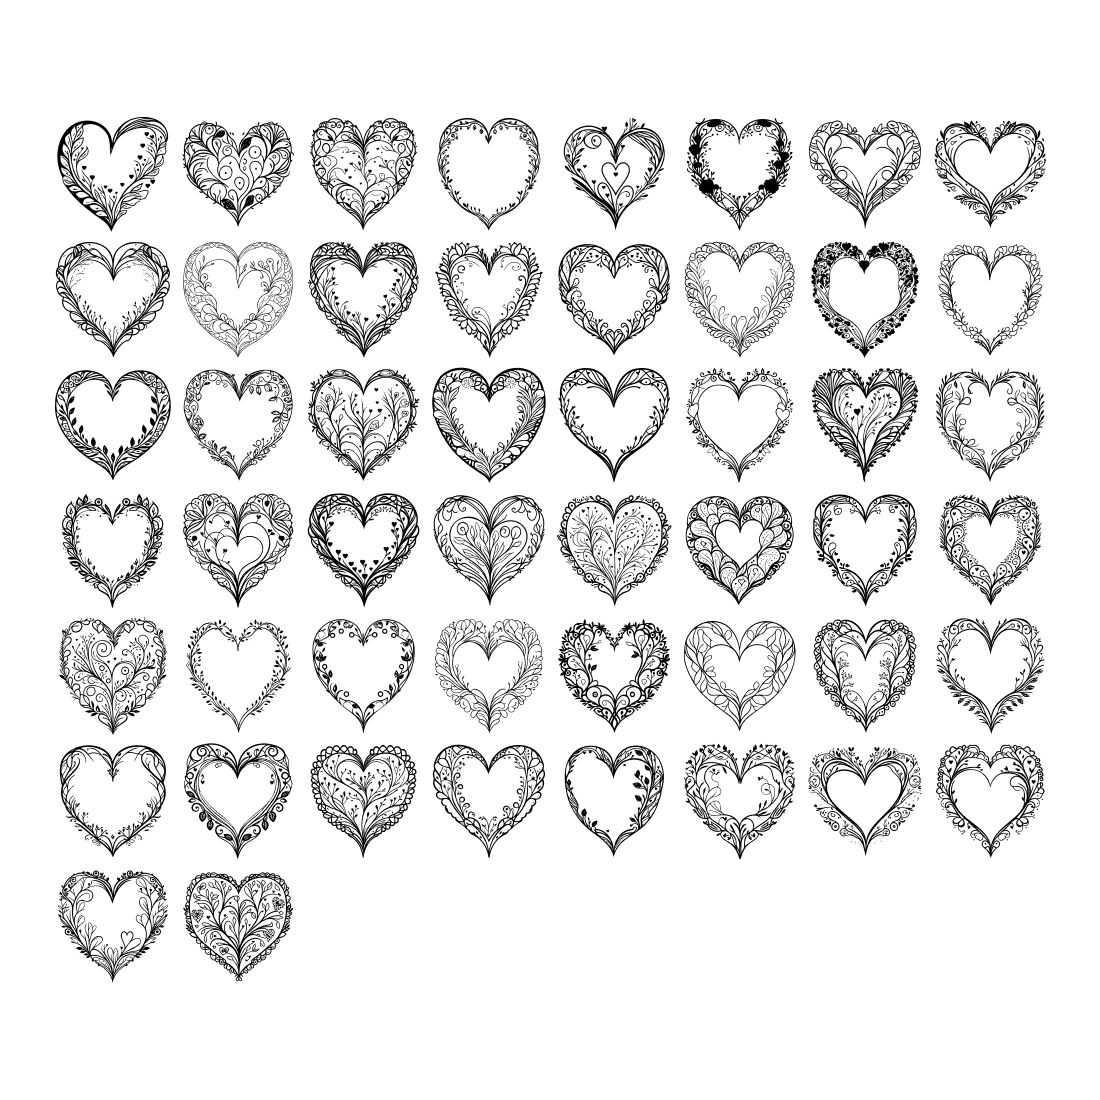 Love Valentine Element Draw Black preview image.